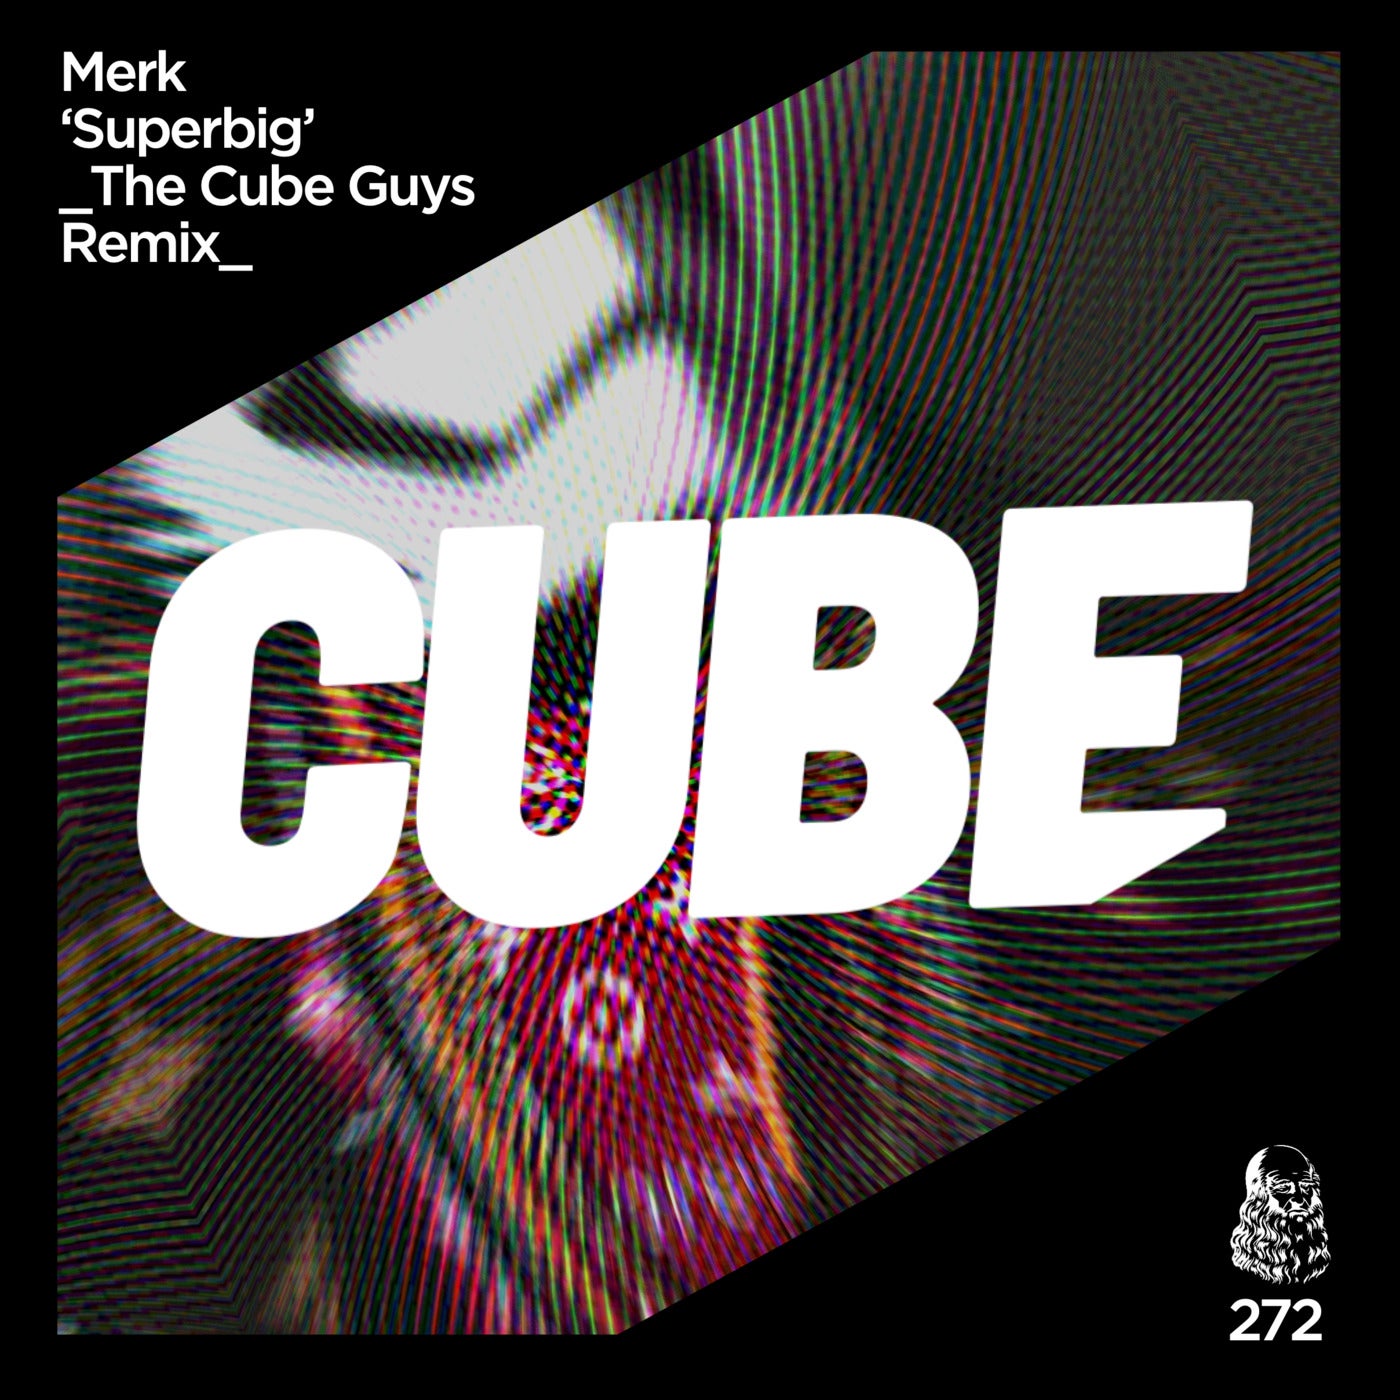 Cube remix. Omen fella Remix.